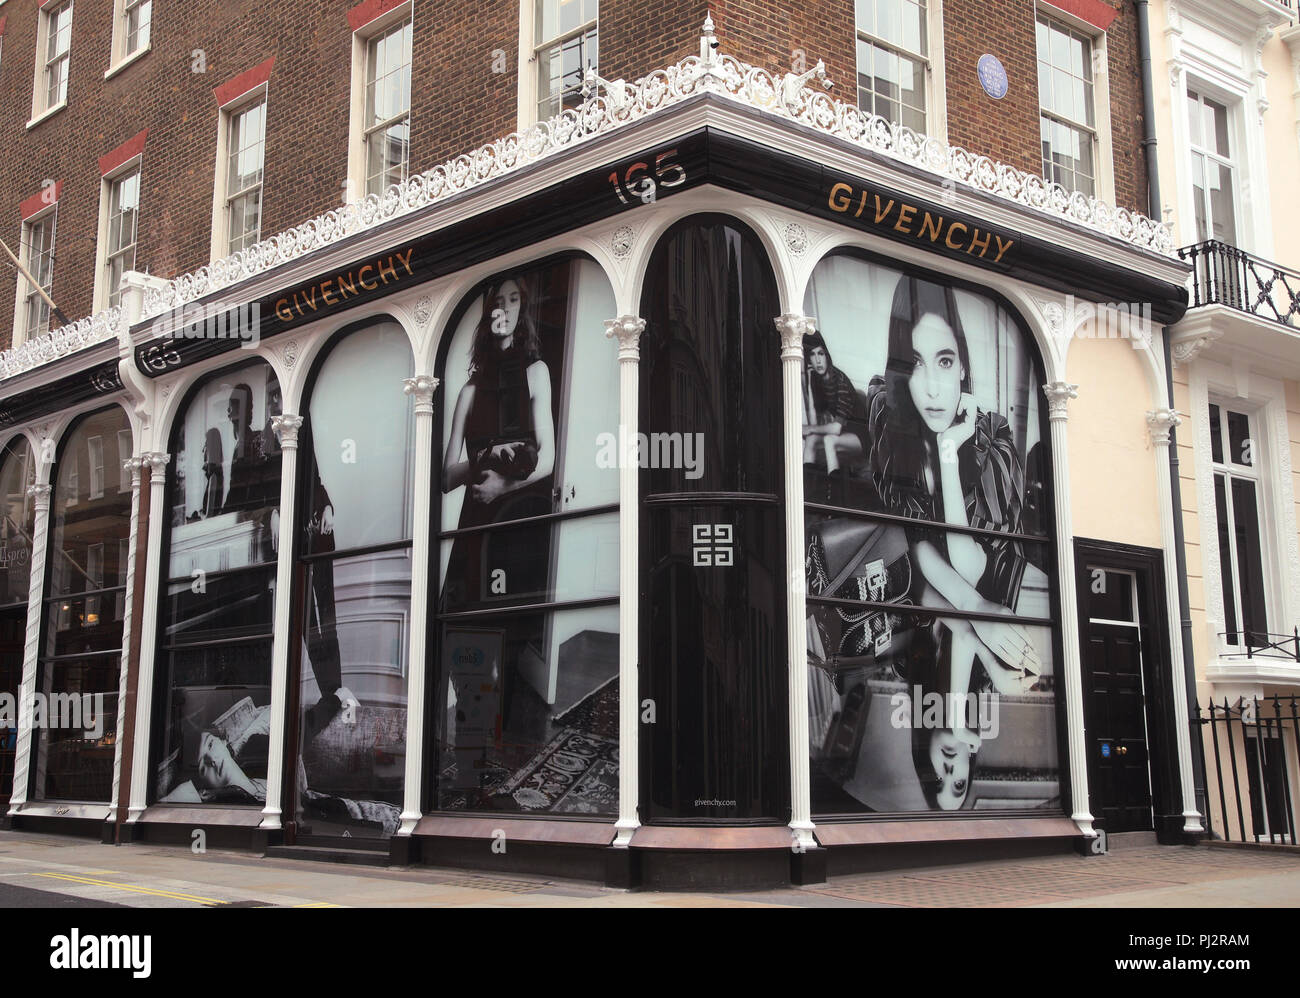 Die givenchy Store auf New Bond Street, London. PRESS ASSOCIATION Foto. Bild Datum: Mittwoch, August 22, 2018. Photo Credit: Yui Mok/PA-Kabel Stockfoto